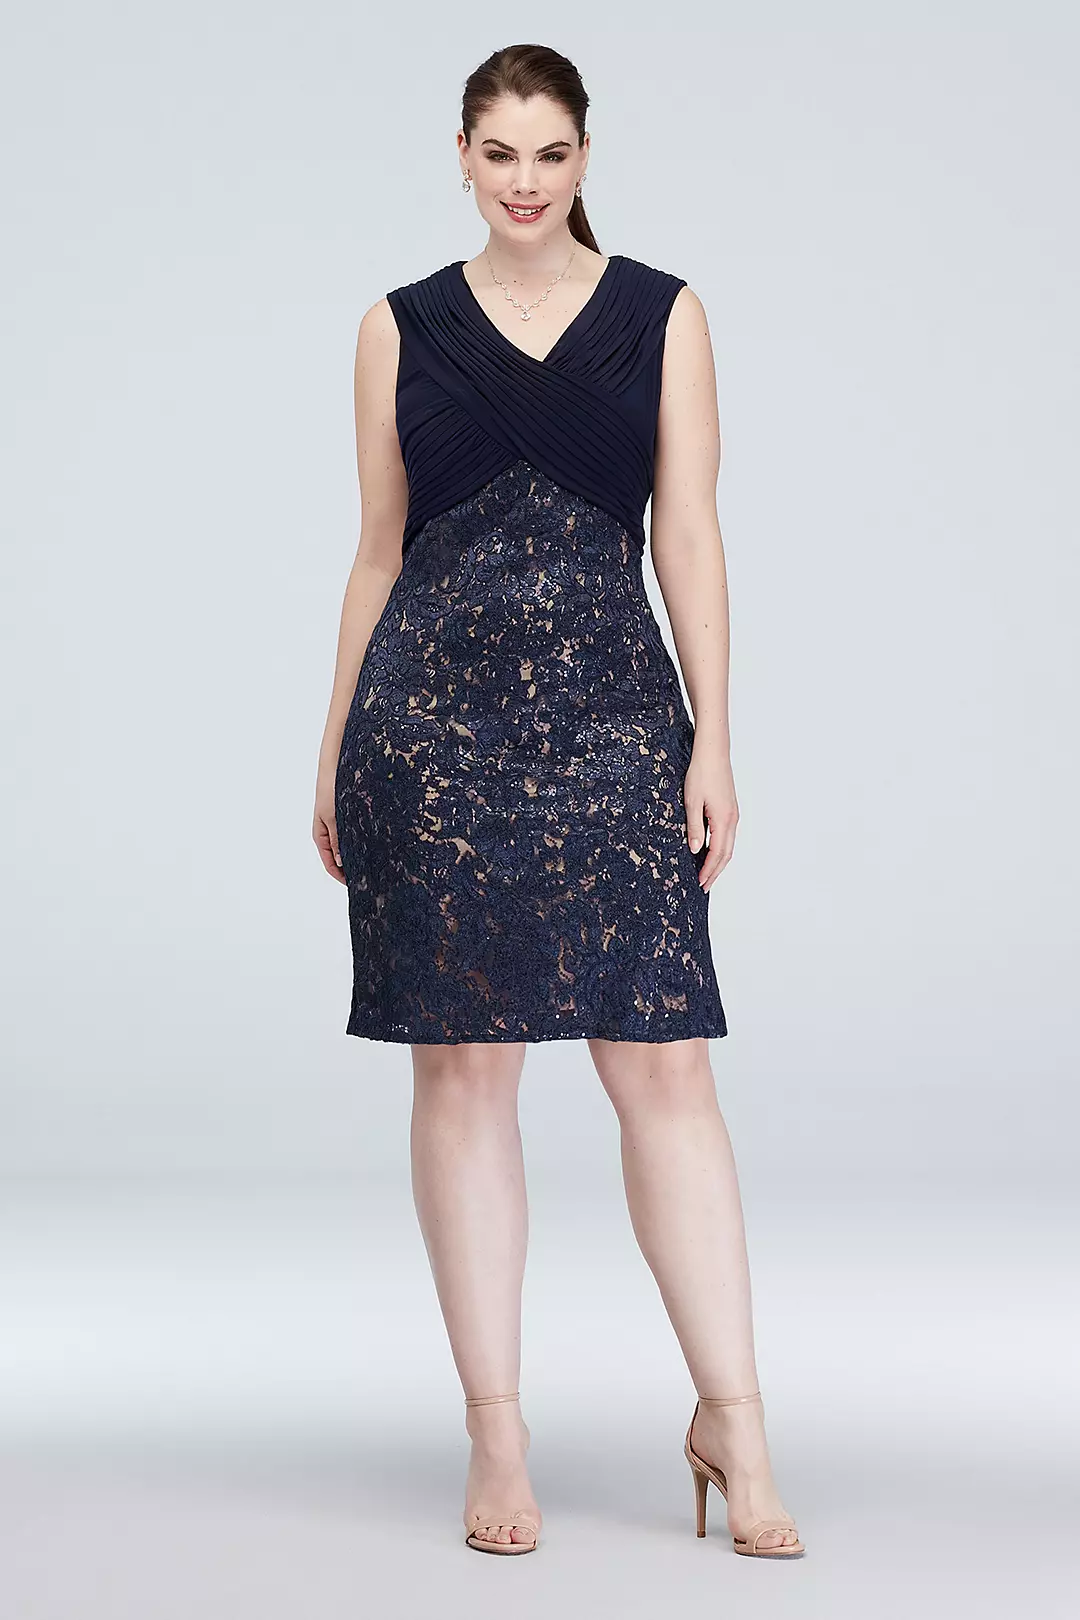 Sequin Embroidered Portrait Collar Plus Size Dress Image